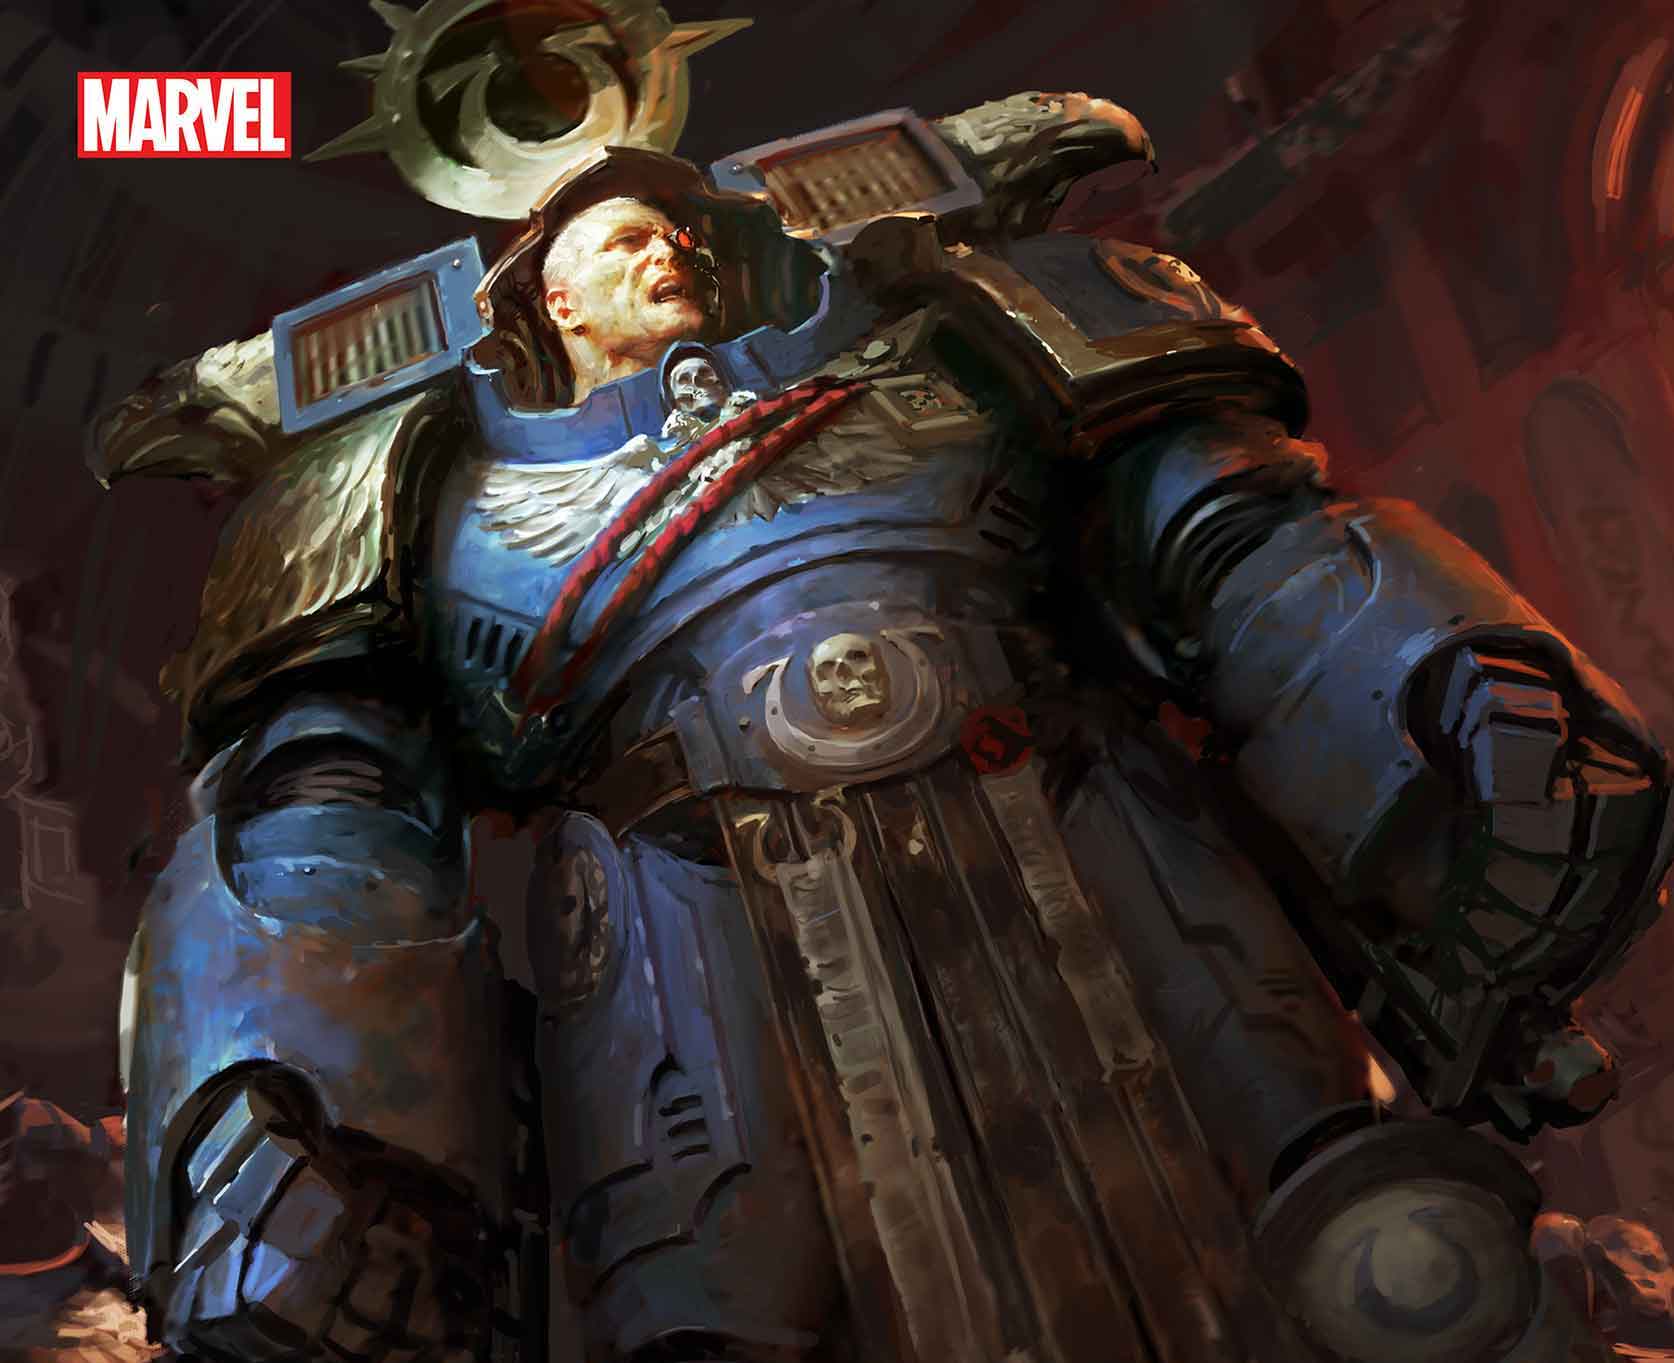 Marvel First Look: Warhammer 40,000 #1 variant